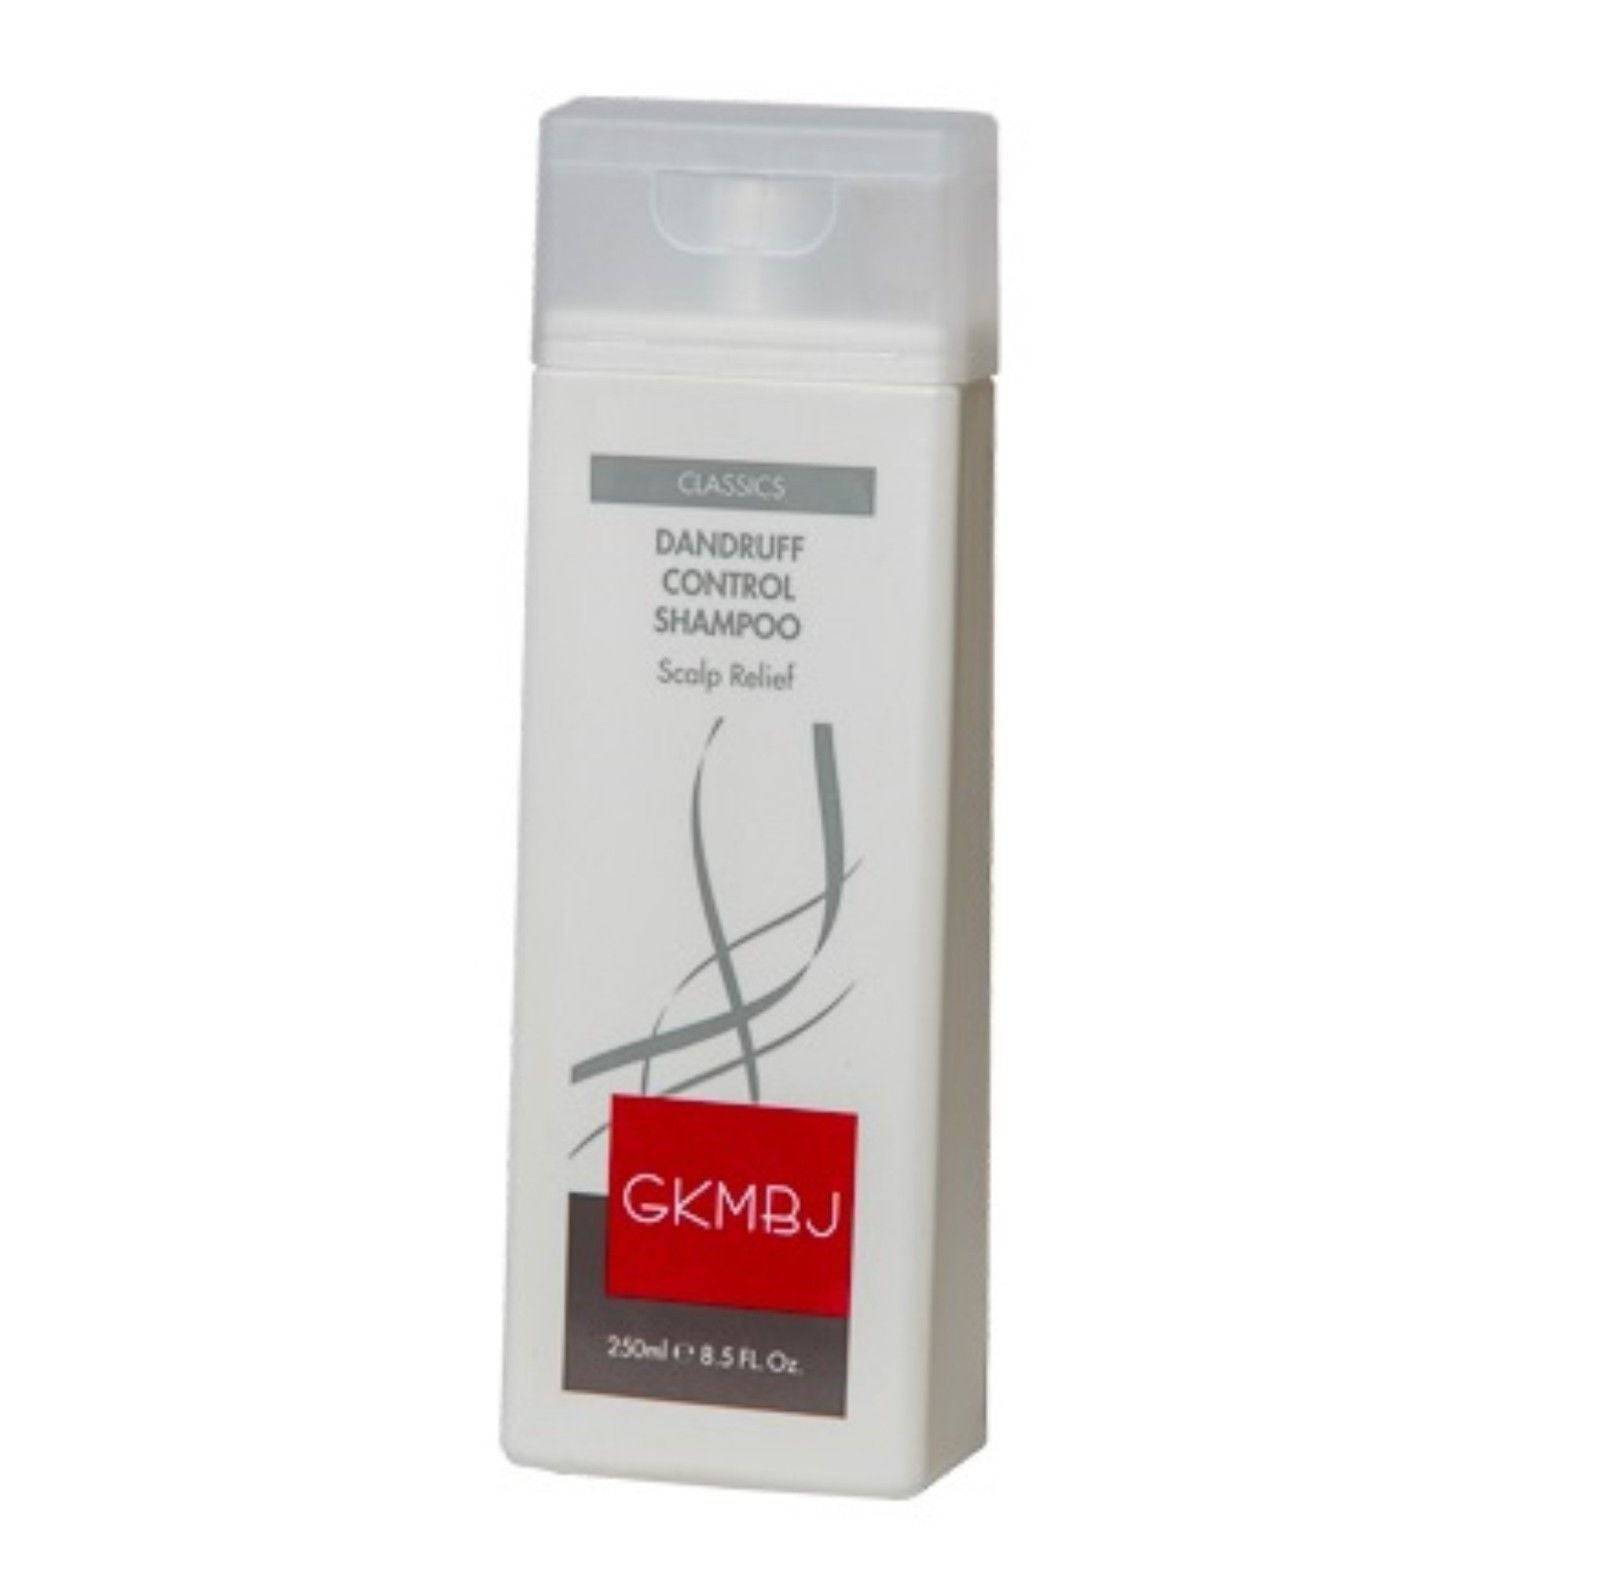 GKMBJ Dandruff Control Shampoo 250ml Improve Scalp - Protect - On Line Hair Depot